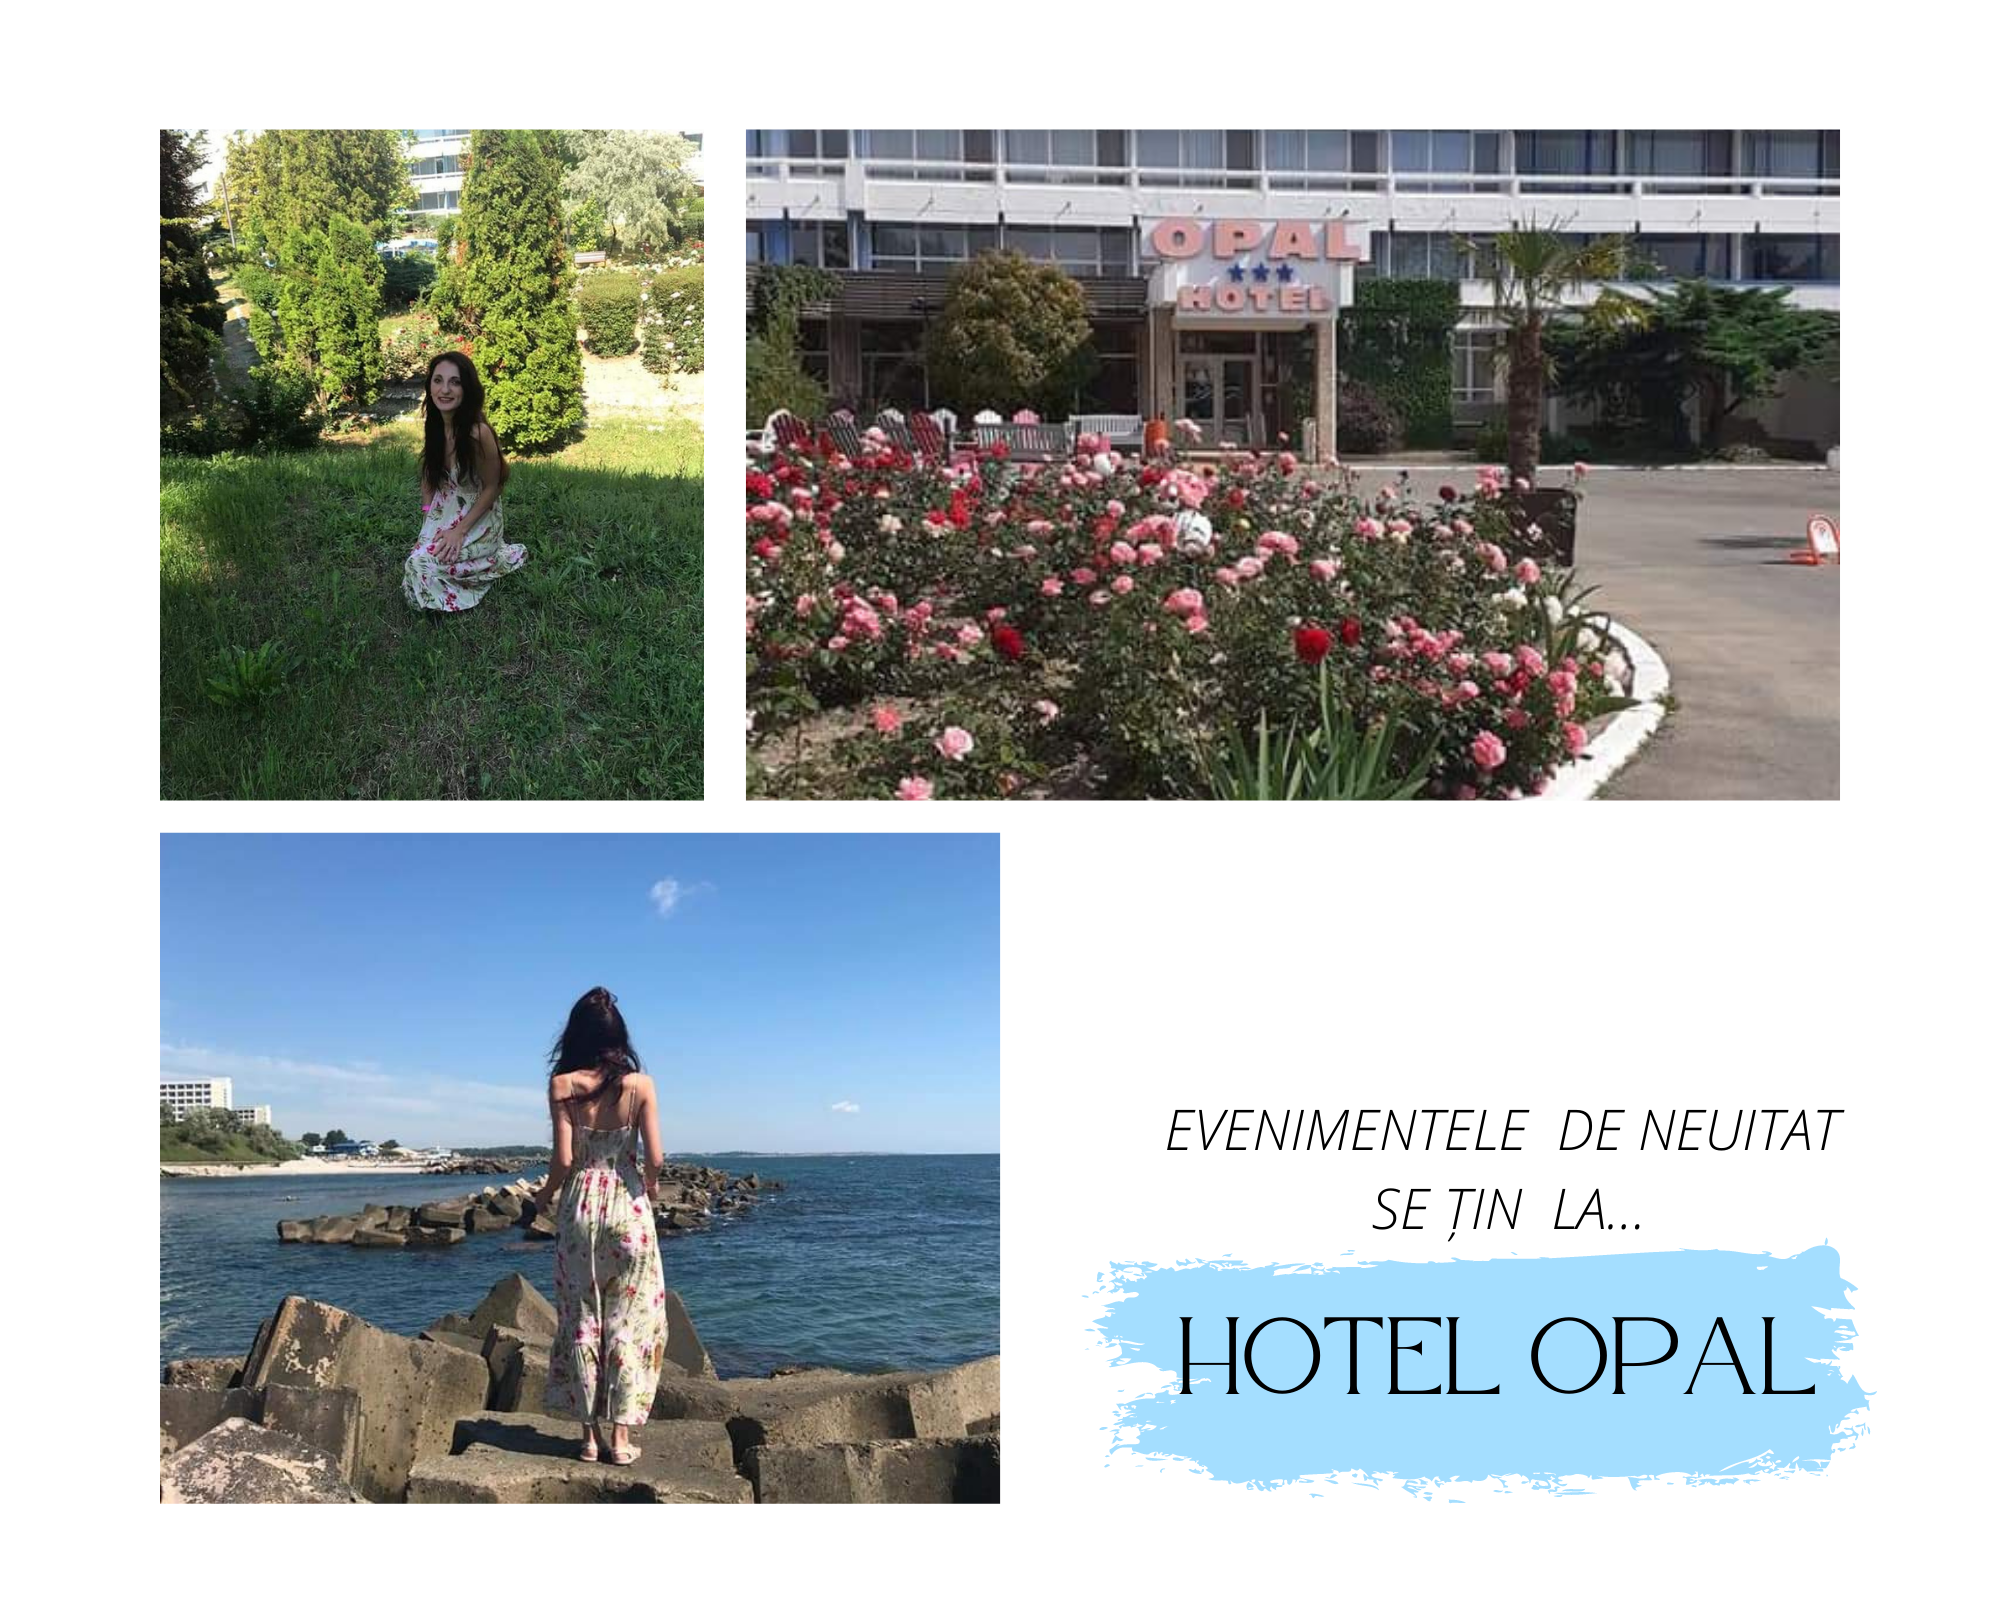 Hotel Opal